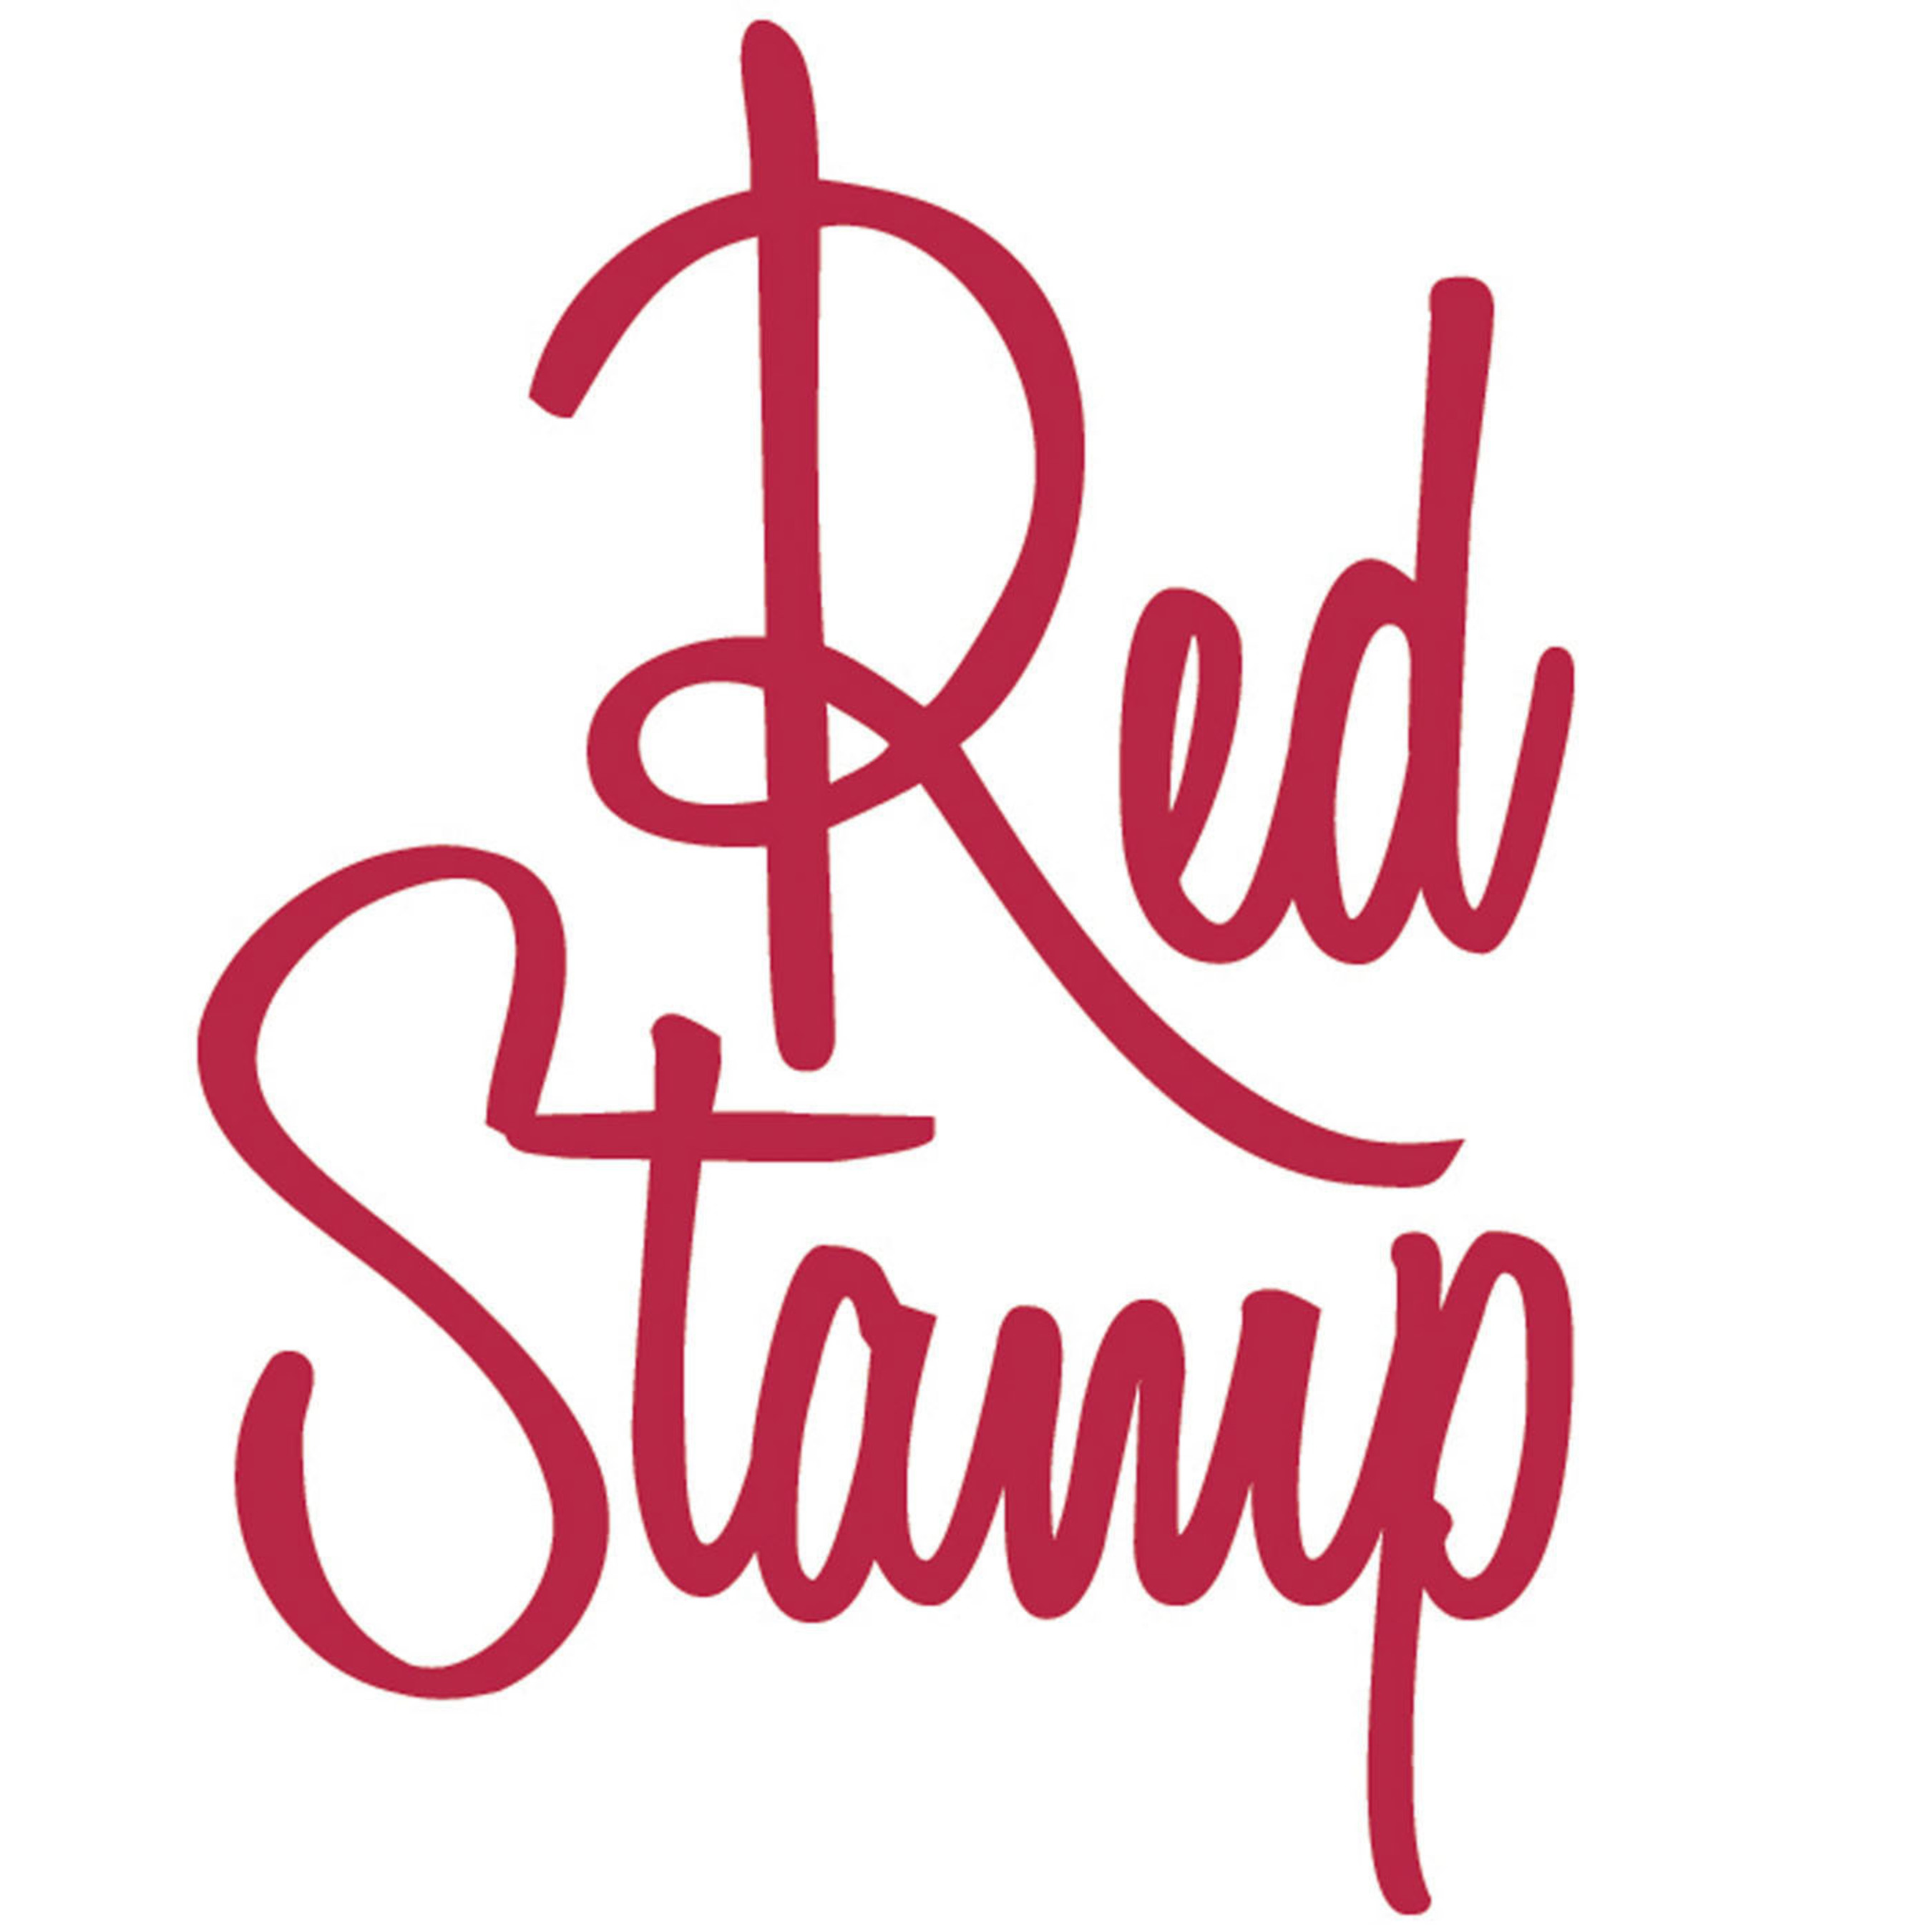 Red Stamp. (PRNewsFoto/The Occasions Group) (PRNewsFoto/)